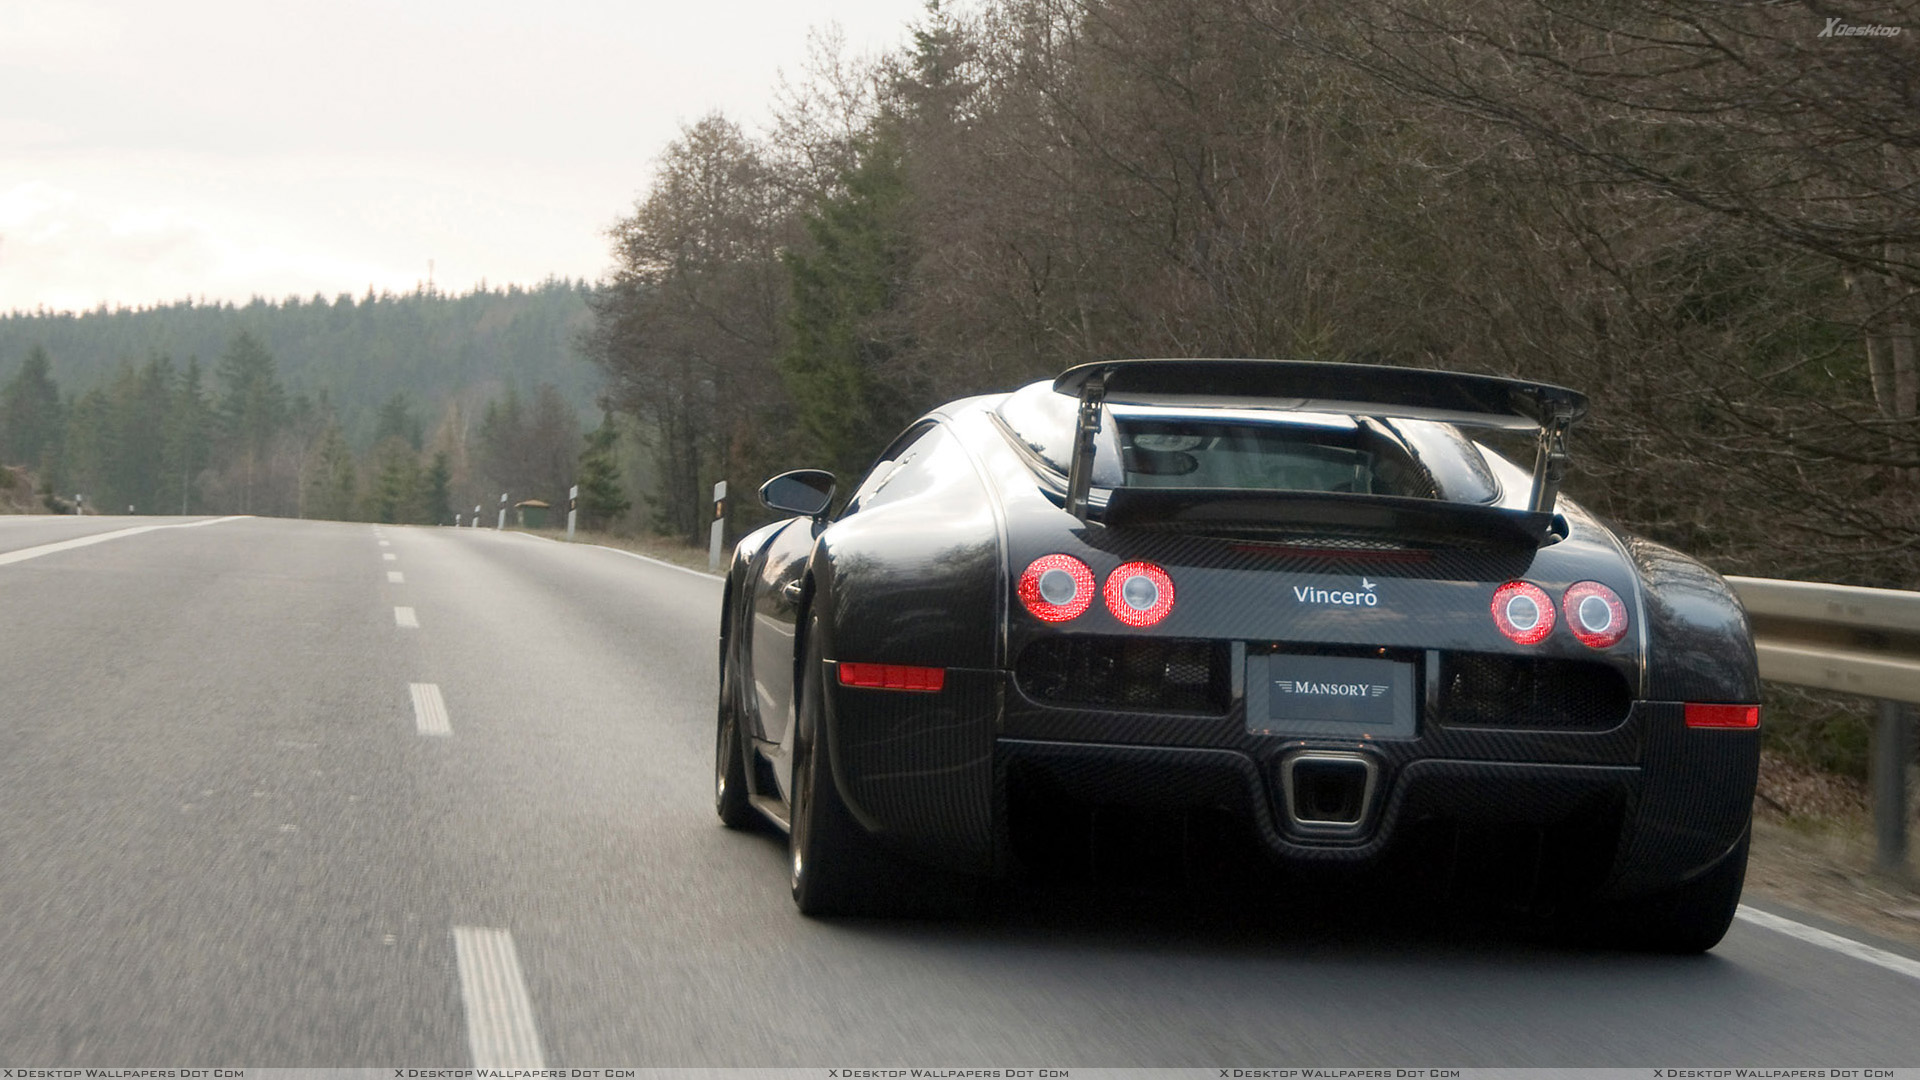 View Wallpaper Details - Black Bugatti Veyron Back , HD Wallpaper & Backgrounds